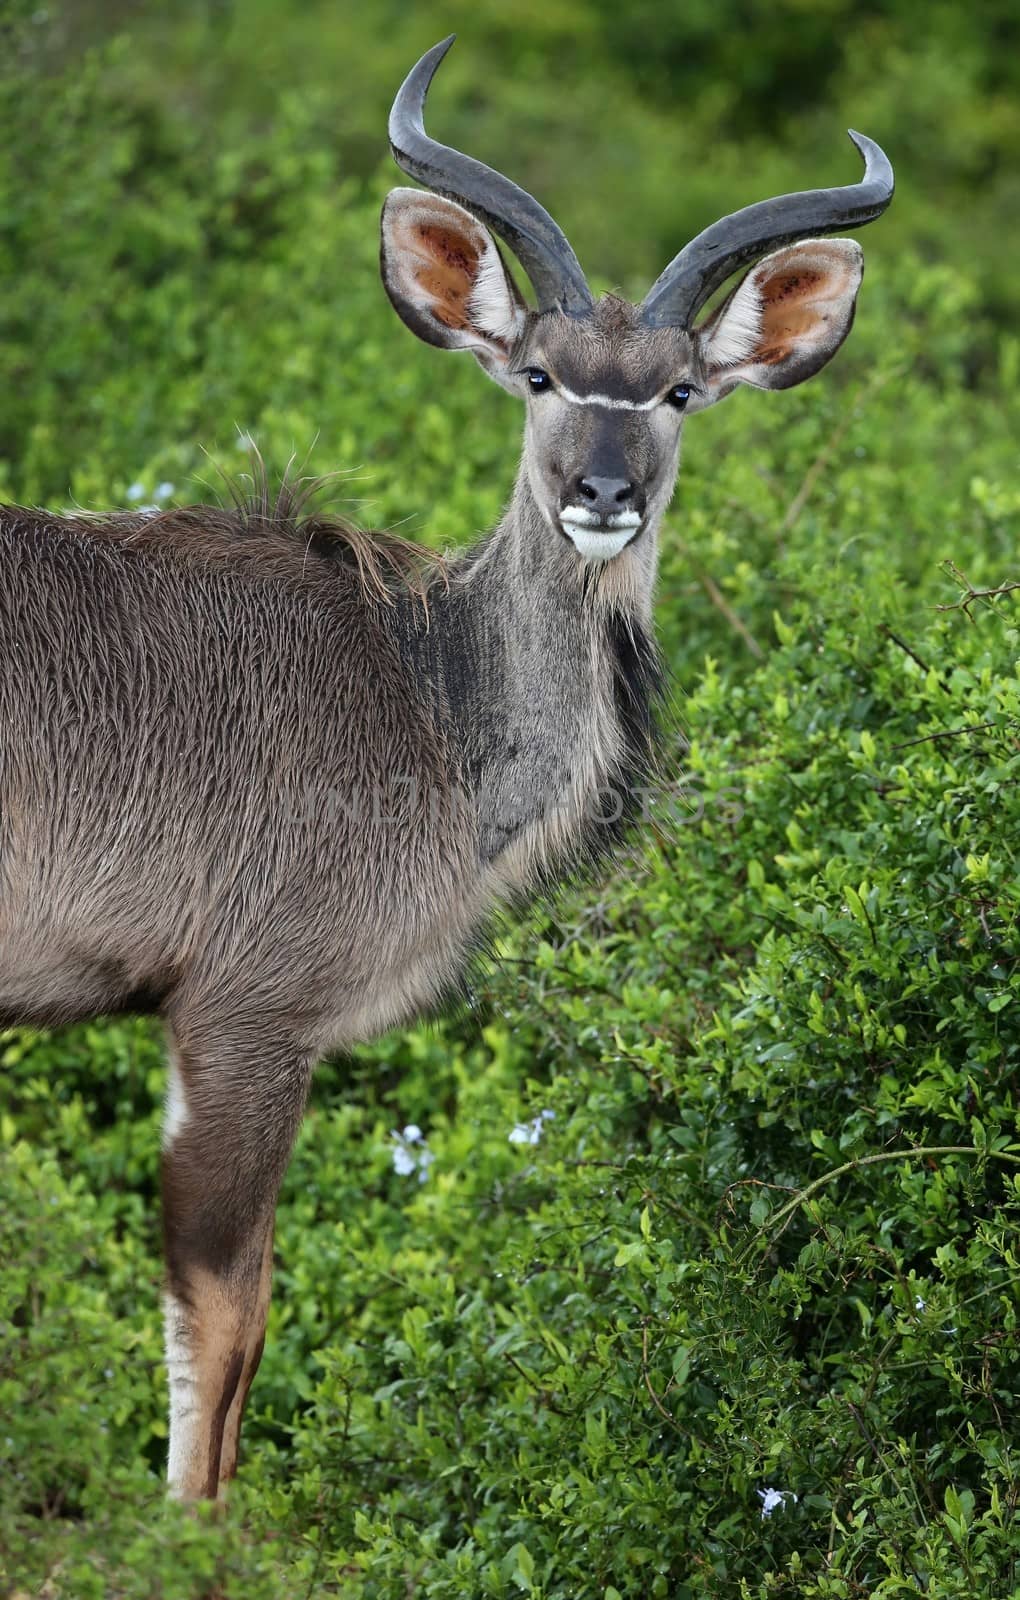 Young Kudu Antelope by fouroaks